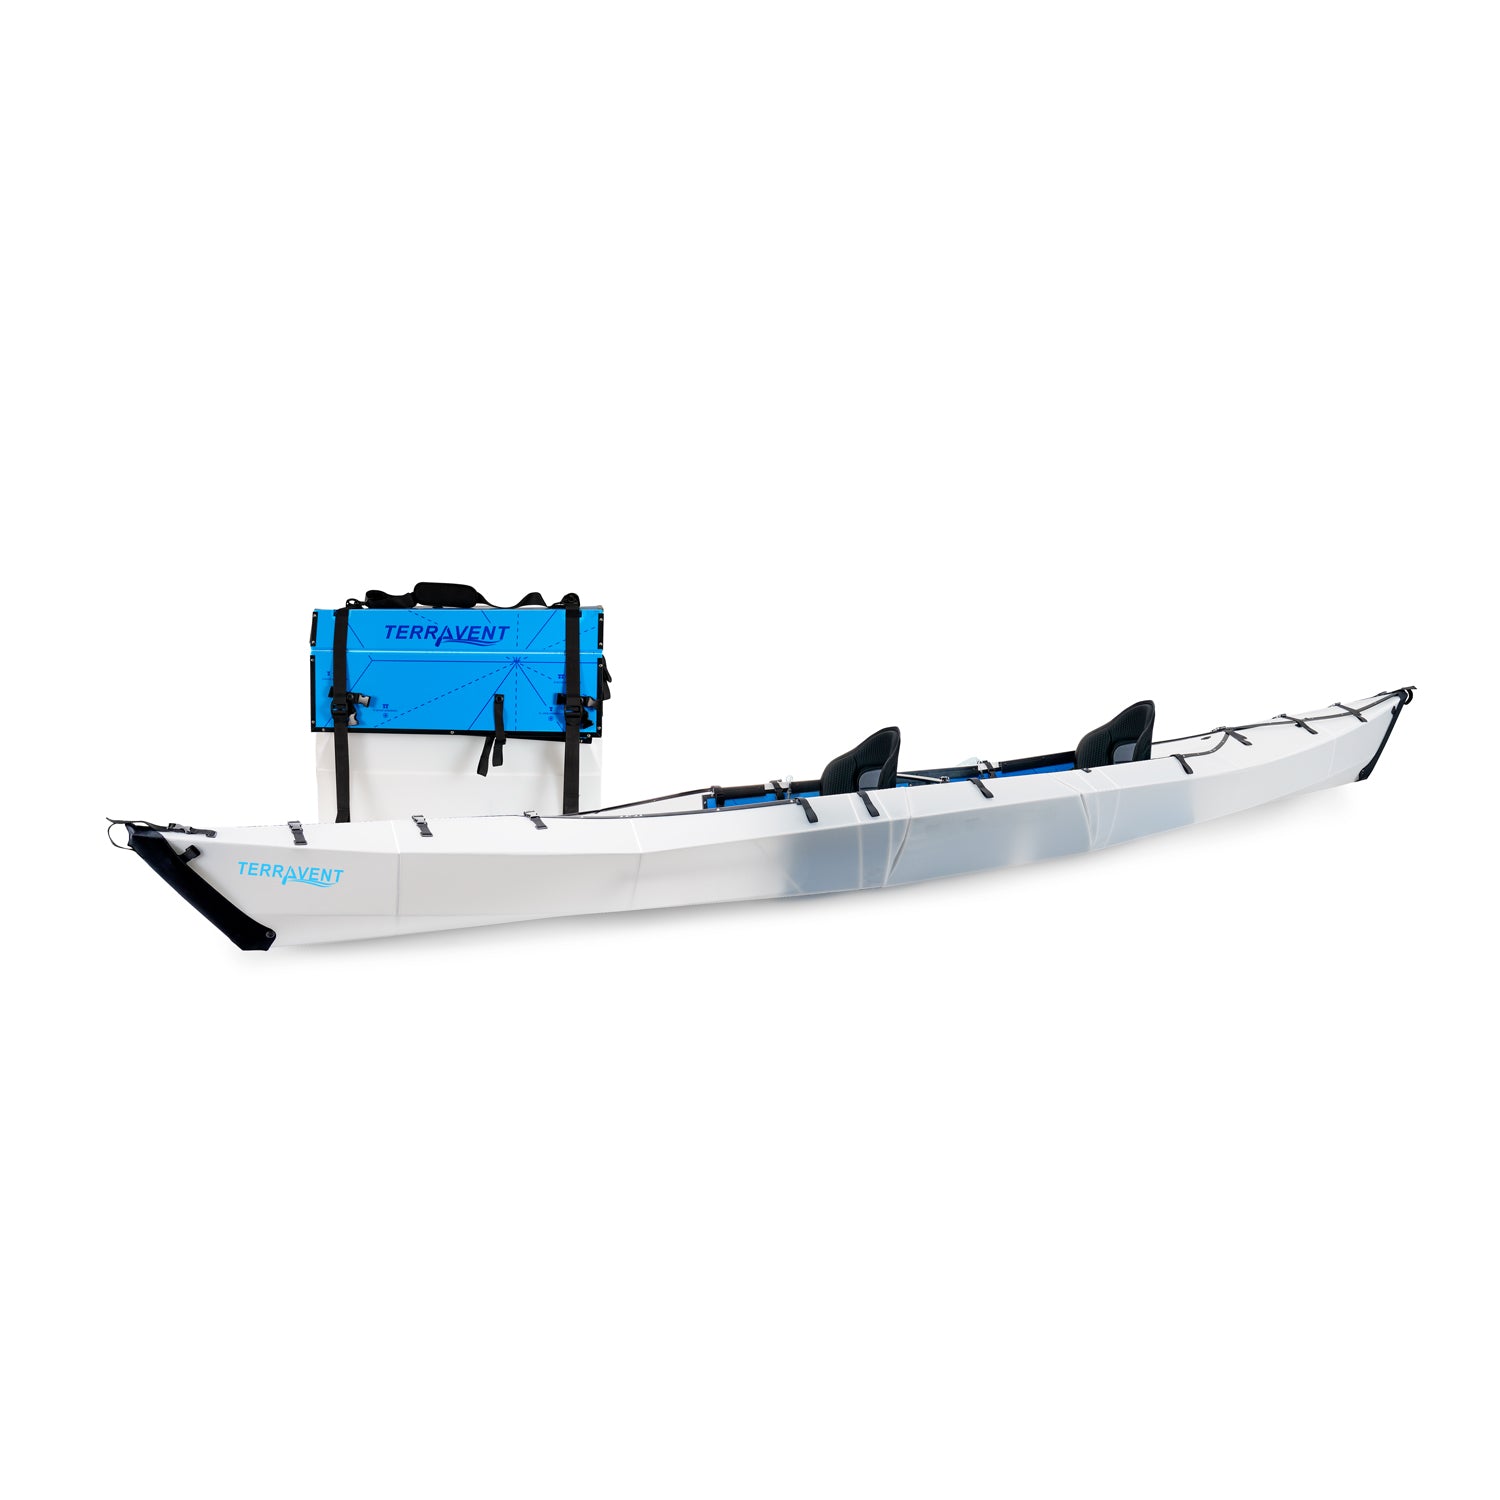 2-person, 2 seater, tandem kayak, foldable kayak, origami kayak, portable folding kayak